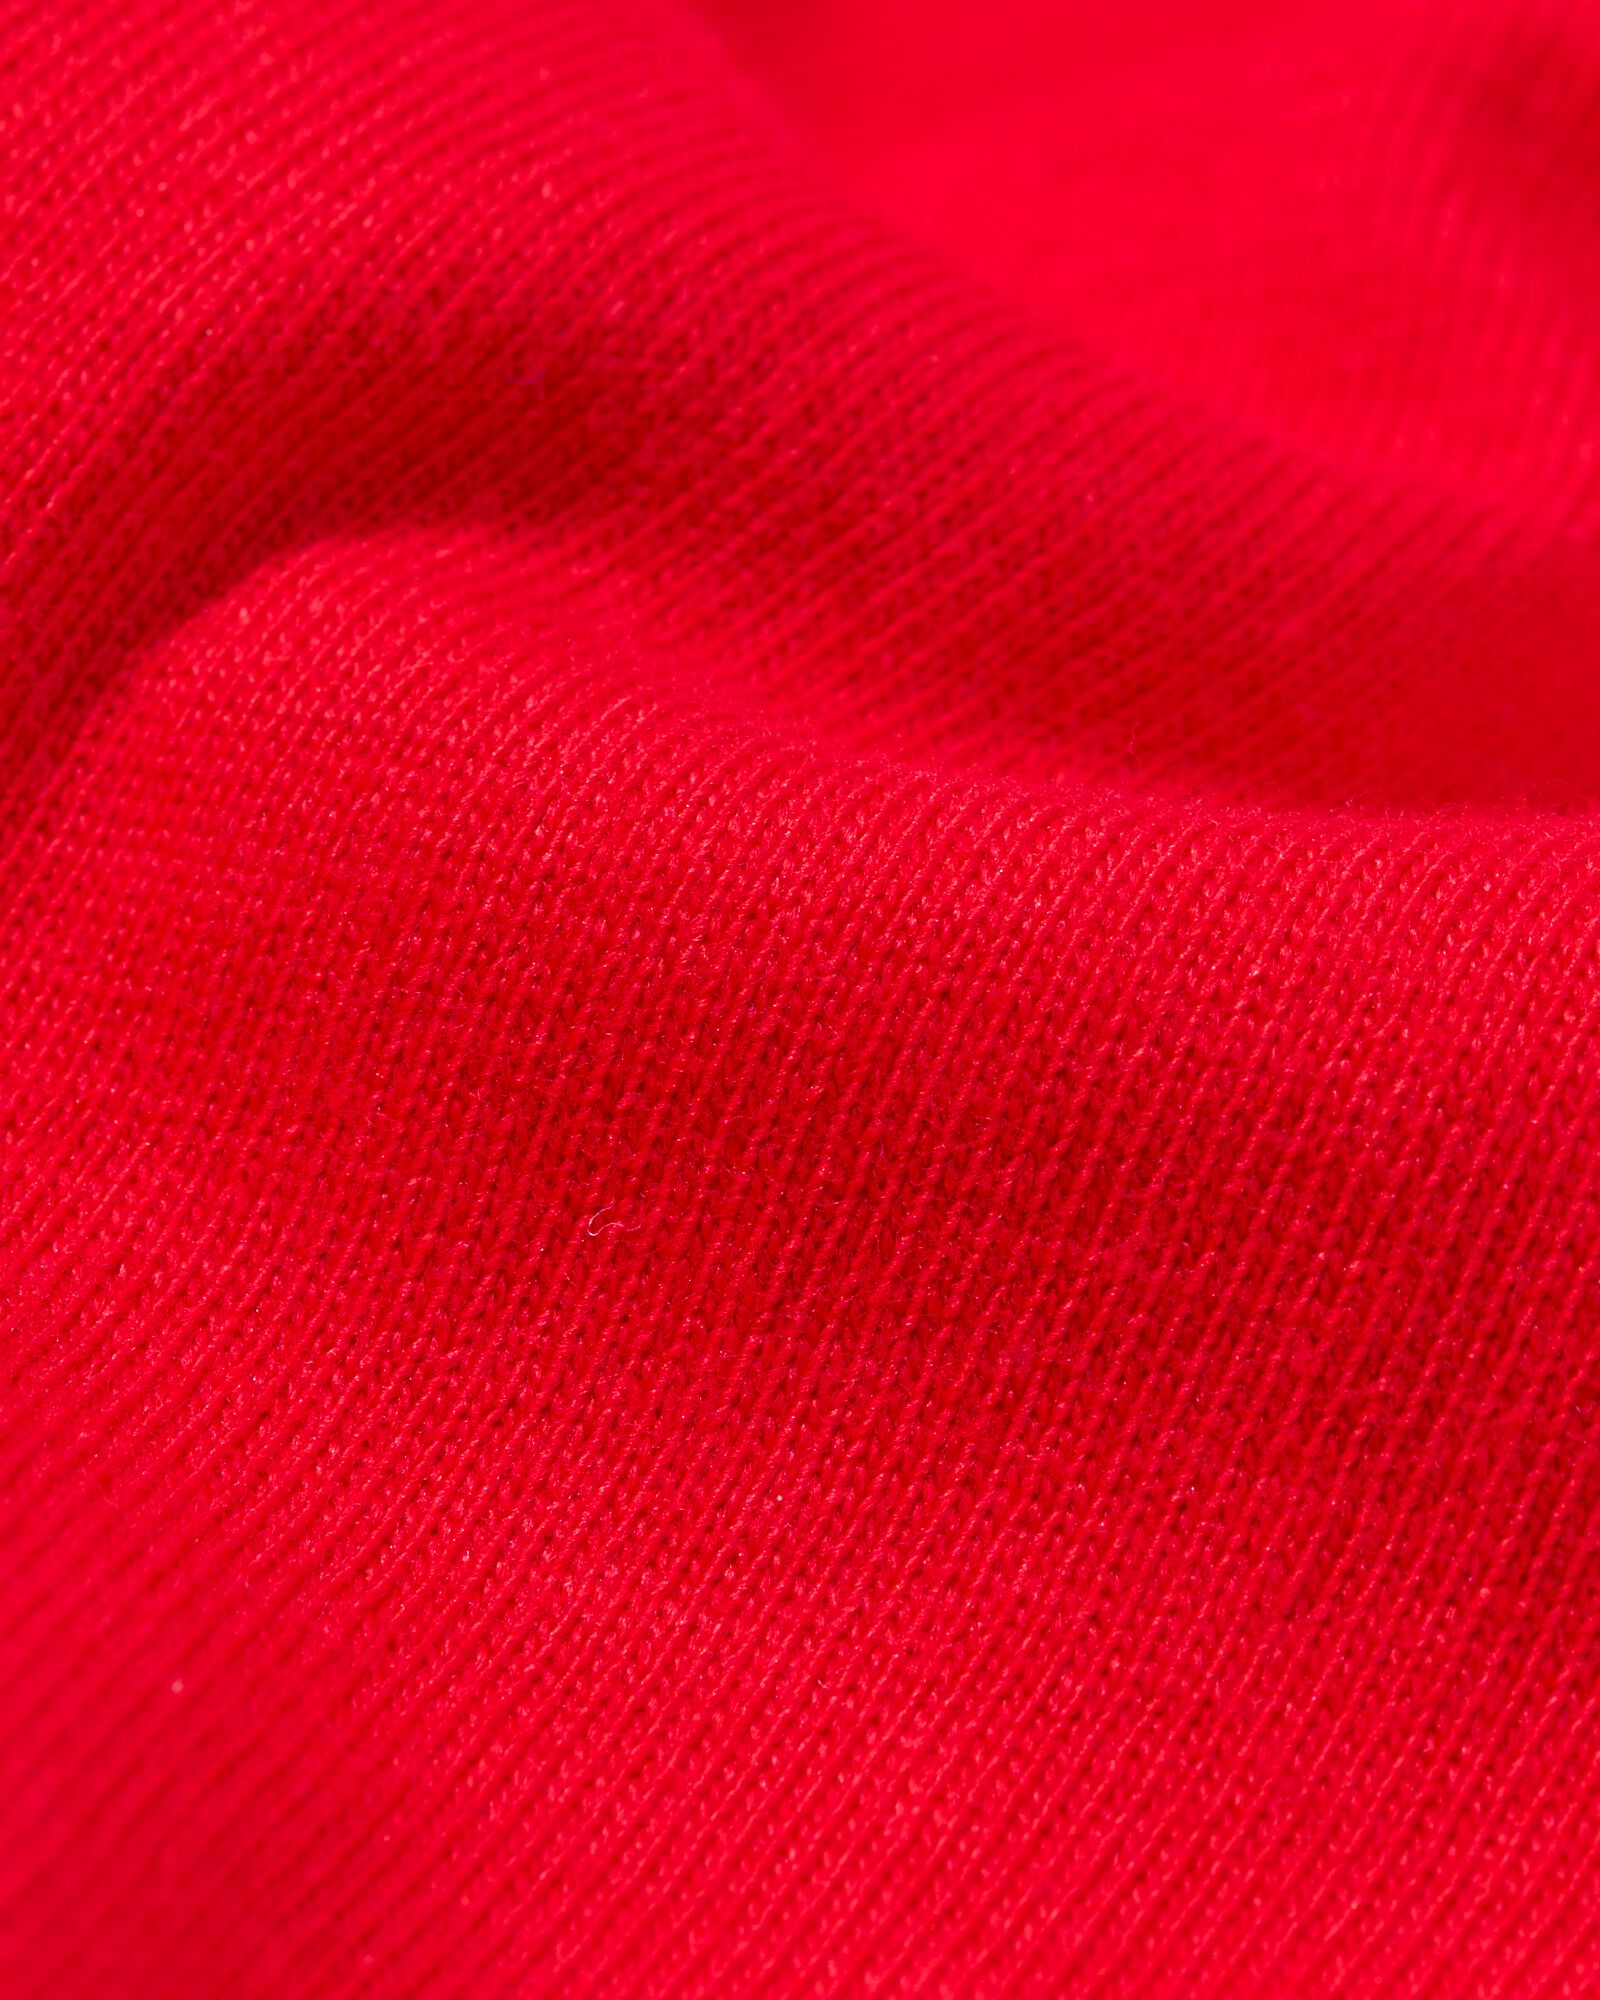 Siepie kindernachthemd katoen rood rood - 23010070RED - HEMA